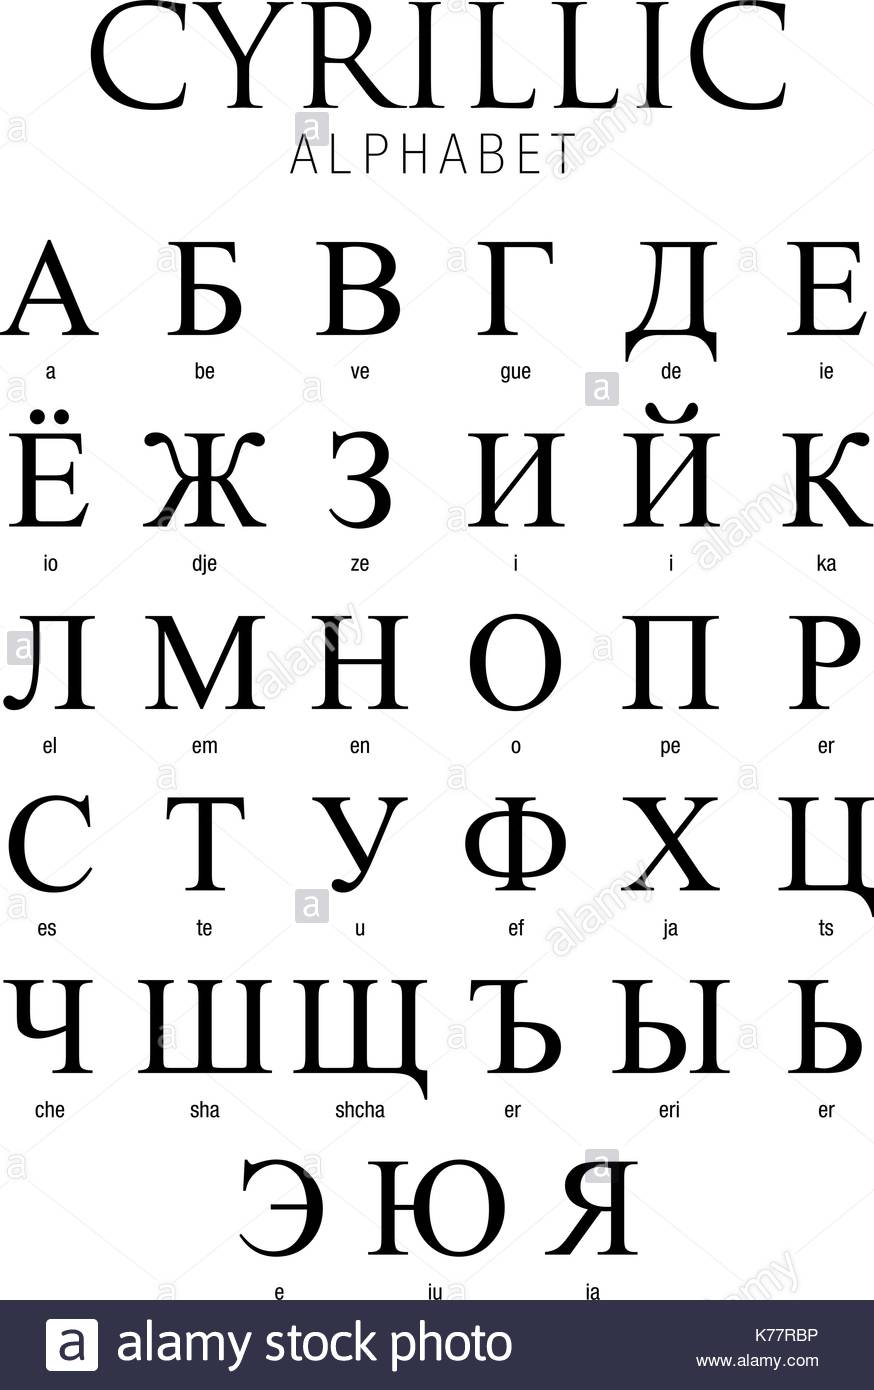 cyrillic-alphabet-on-white-background-vector-image-K77RBP.jpg